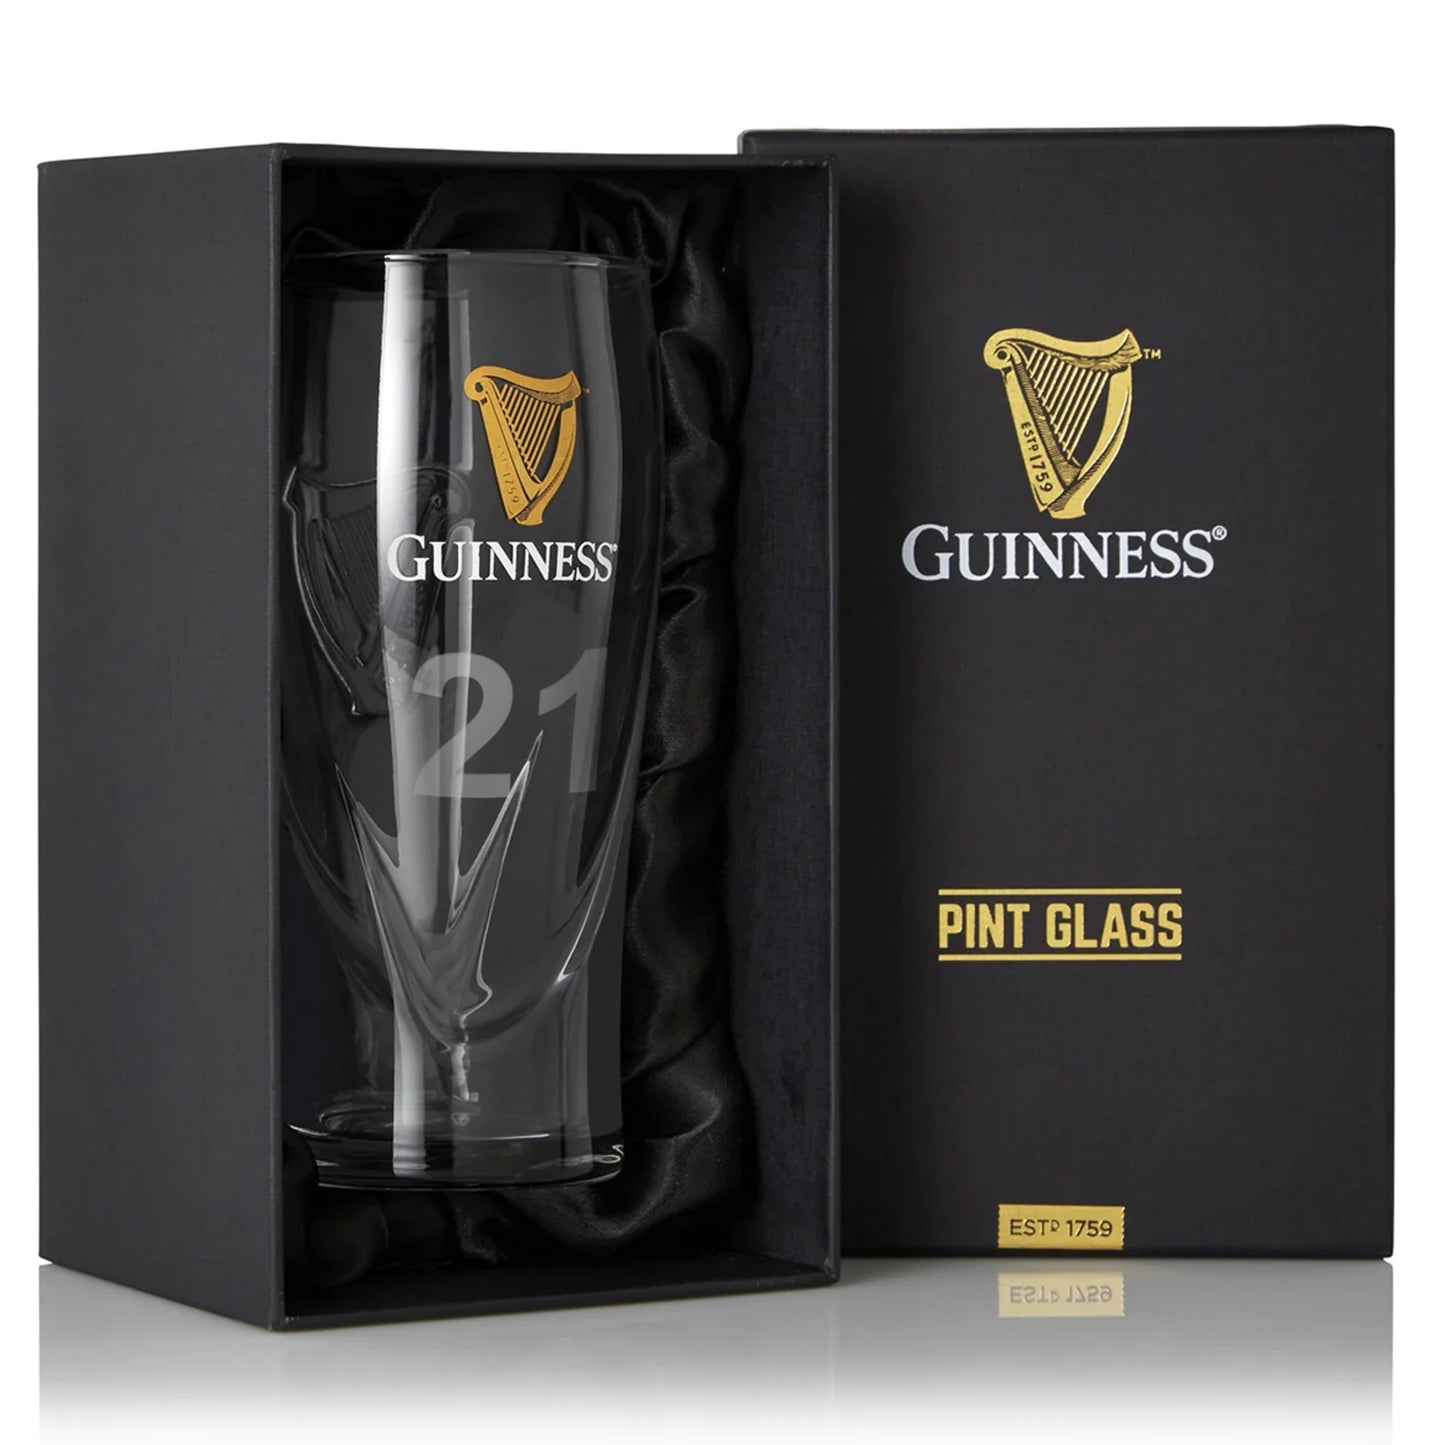 A Guinness Pint Glass in its original Guinness packaging box.